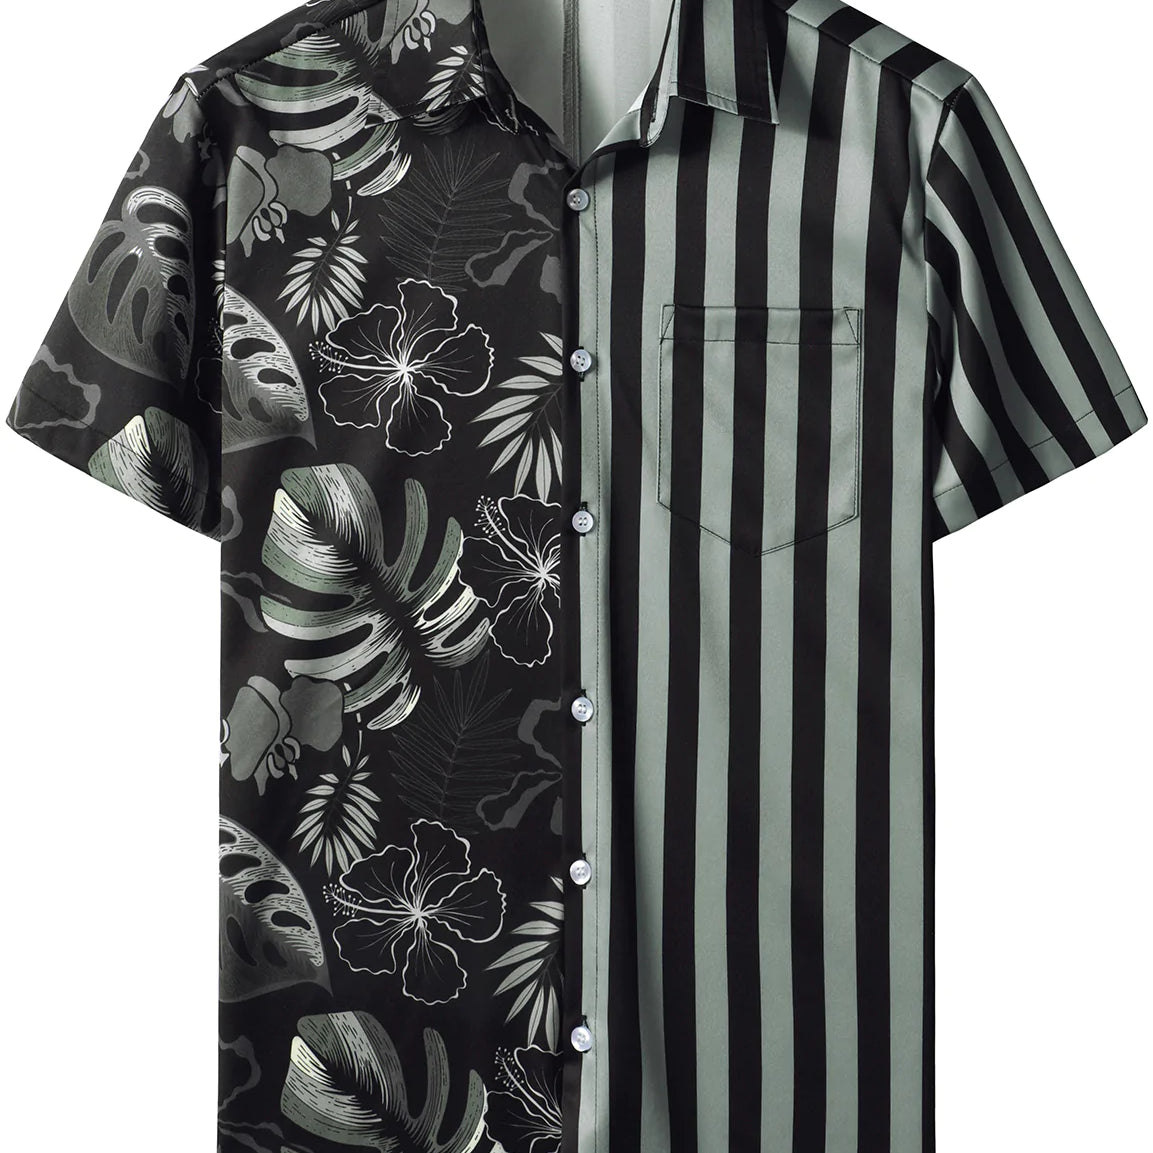 Men's Black Striped & Floral Print Short Sleeve Casual Hawaiian Vacation Beach Shirt